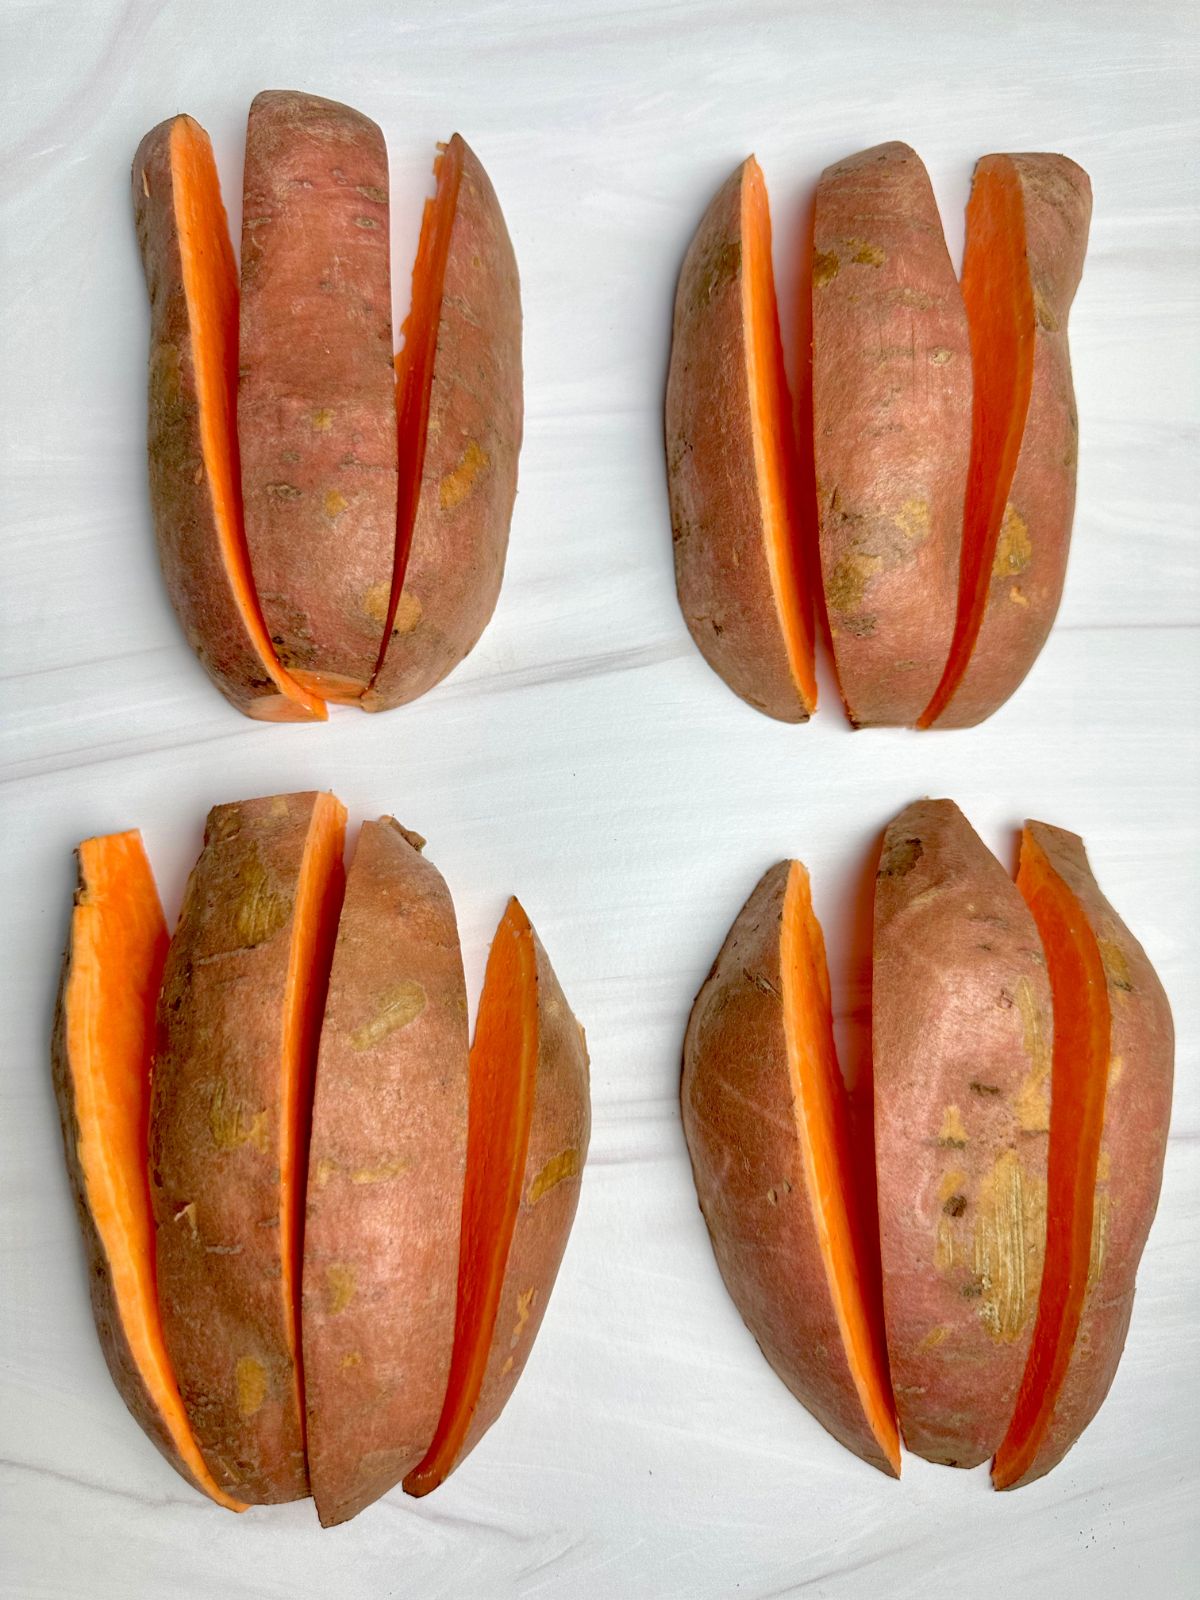 Four sweet potato wedges halves cut into wedges.